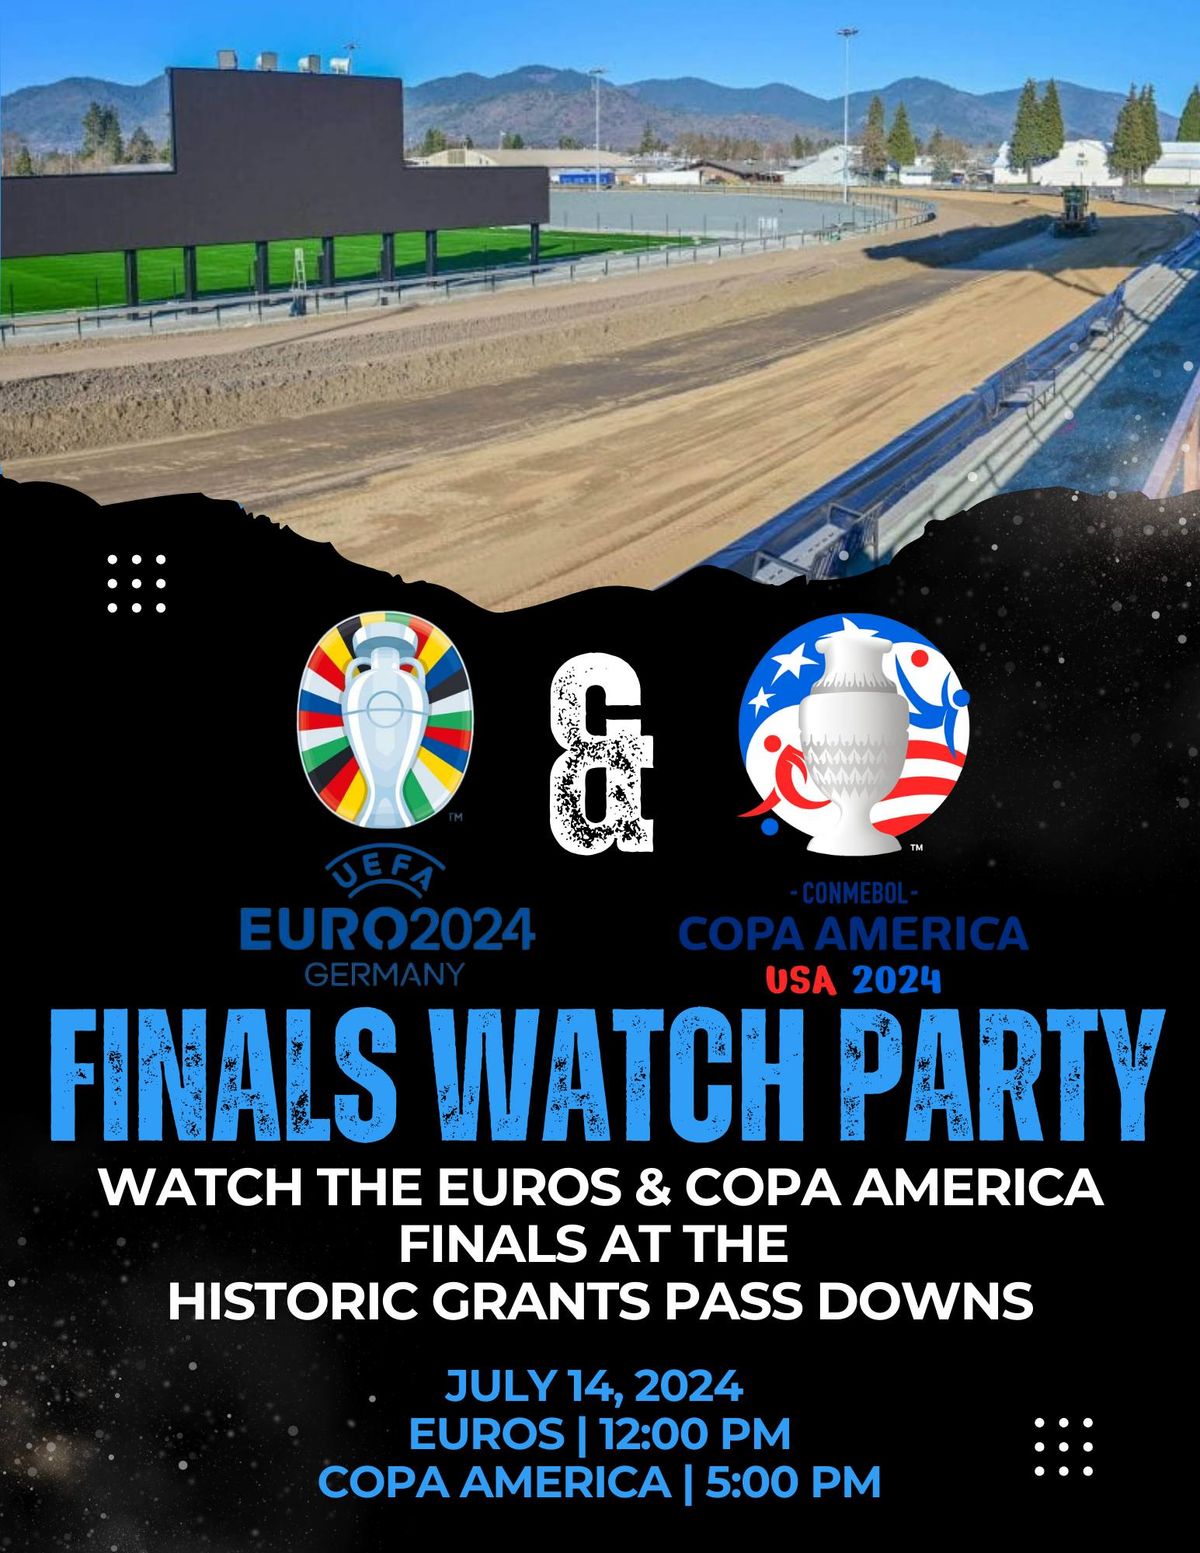 Euros & Copa America Finals Watch Party!